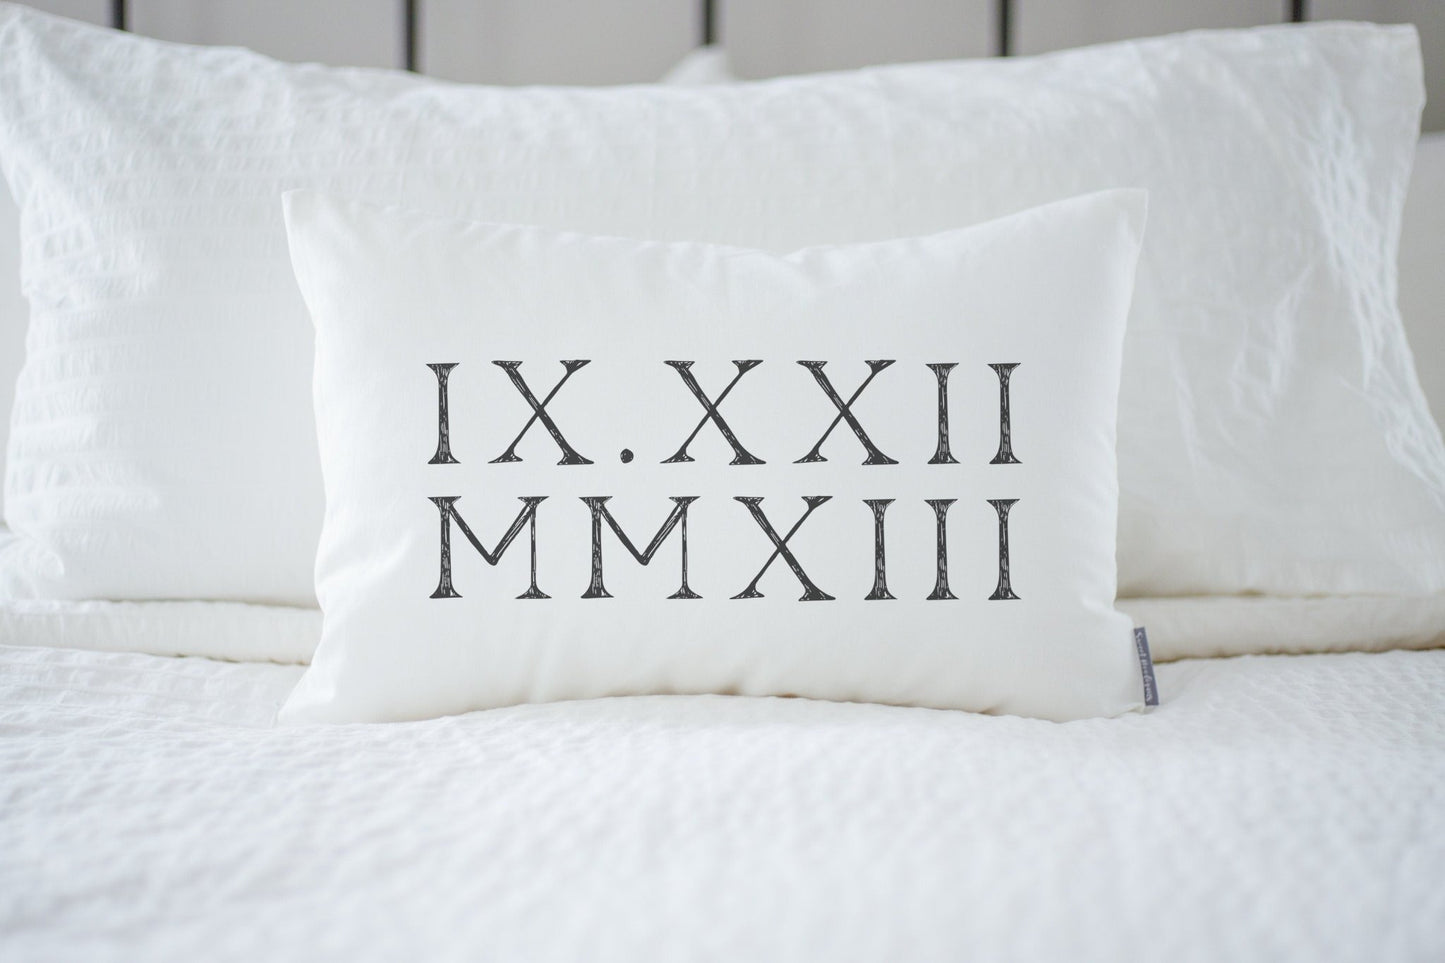 Personalized Roman Numeral Wedding Date Pillow | Wedding Gift Idea | Bridal Shower Personalized Gift | Rustic Home Decor | Farmhouse Decor